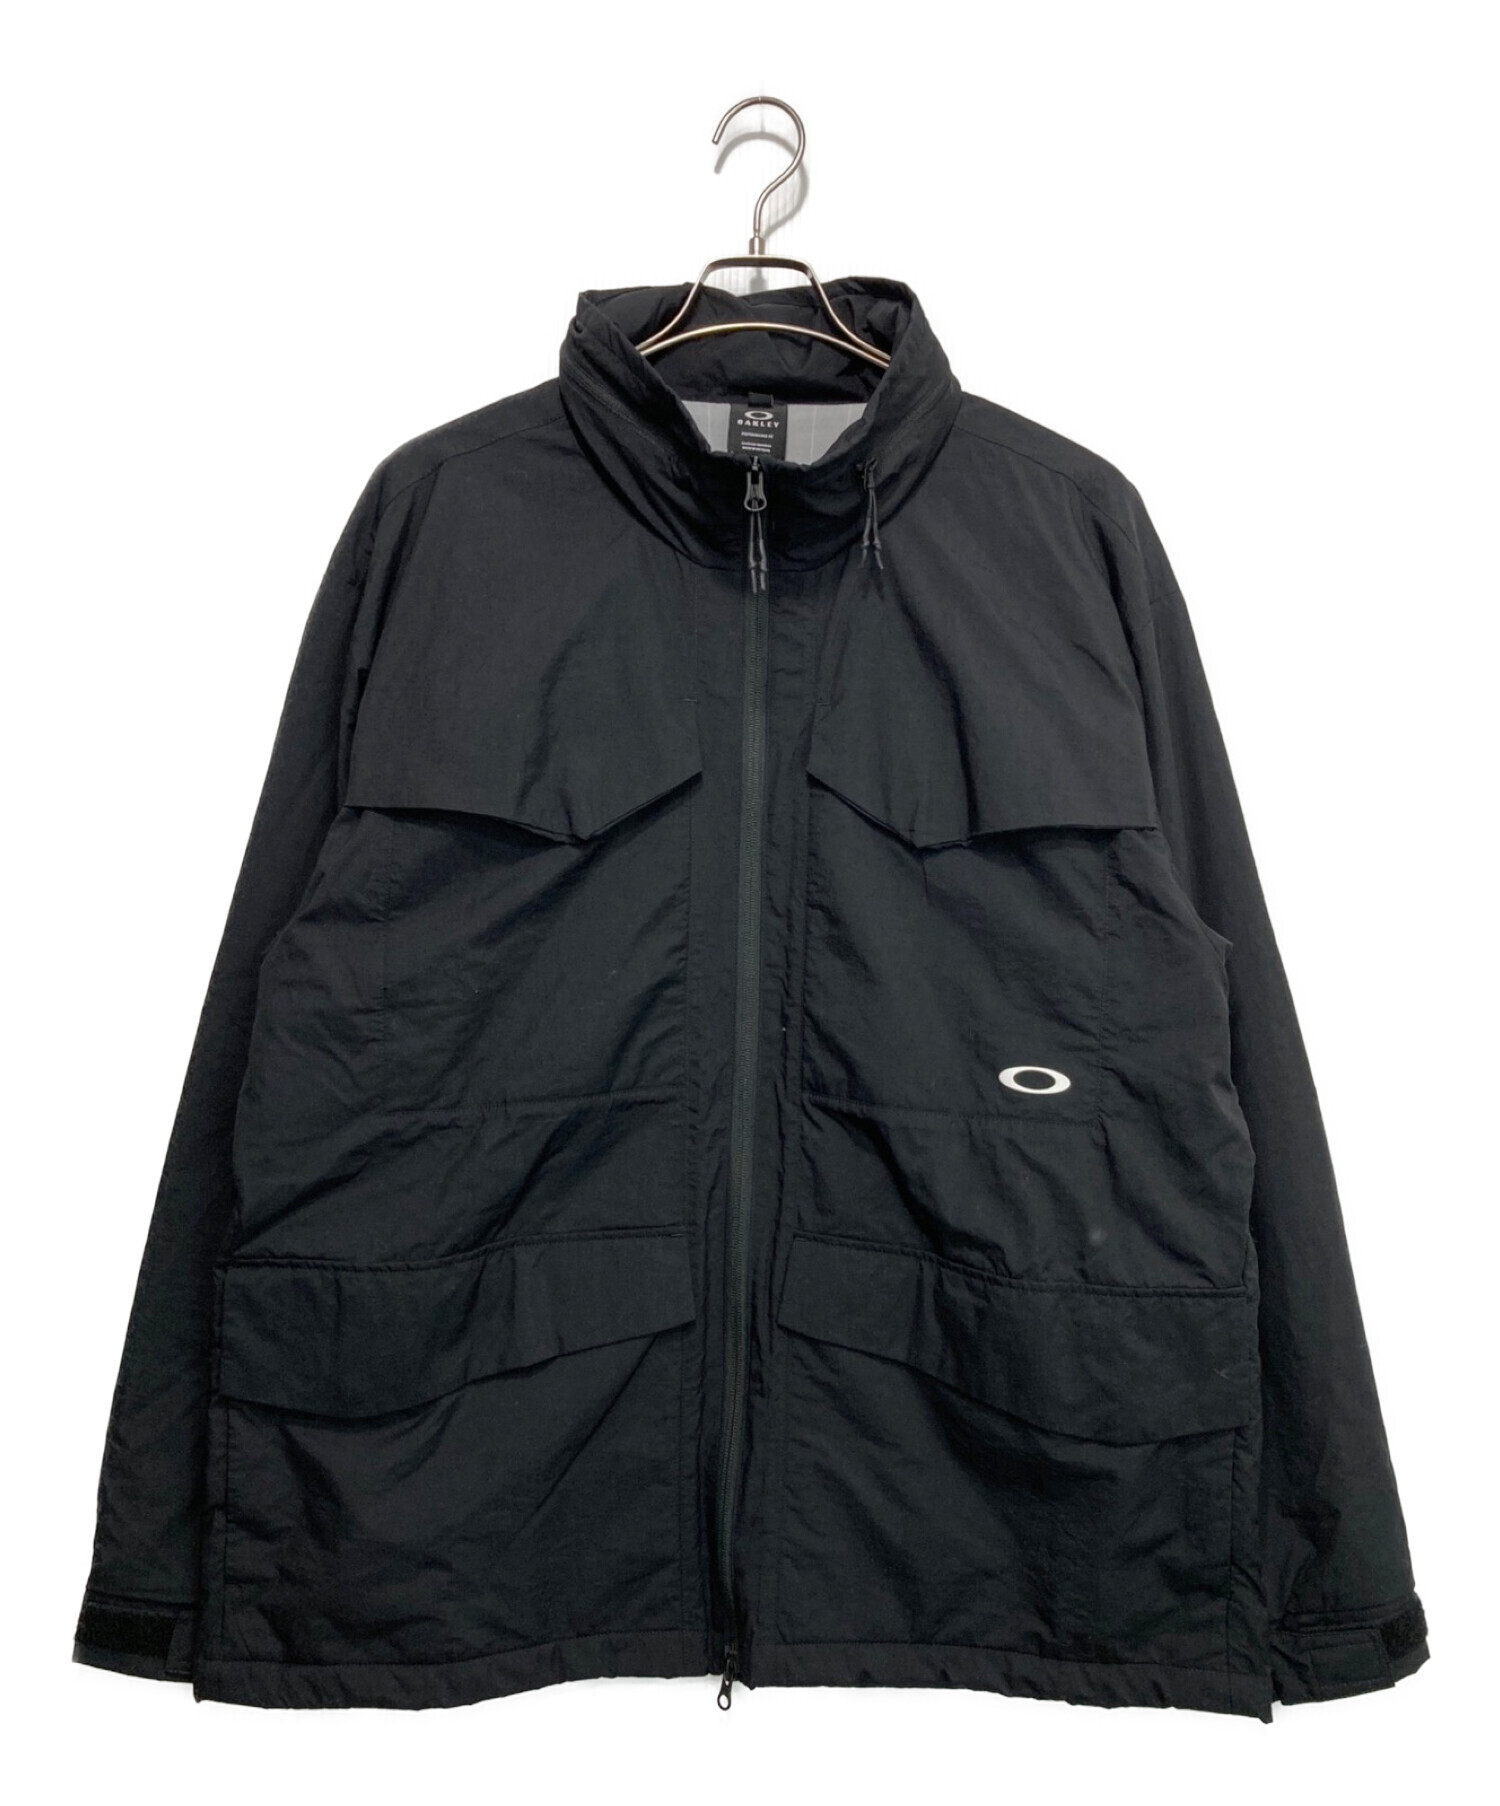 OAKLEY (オークリー) VARIA WIND WARM ジャケット ブラック サイズ:XL